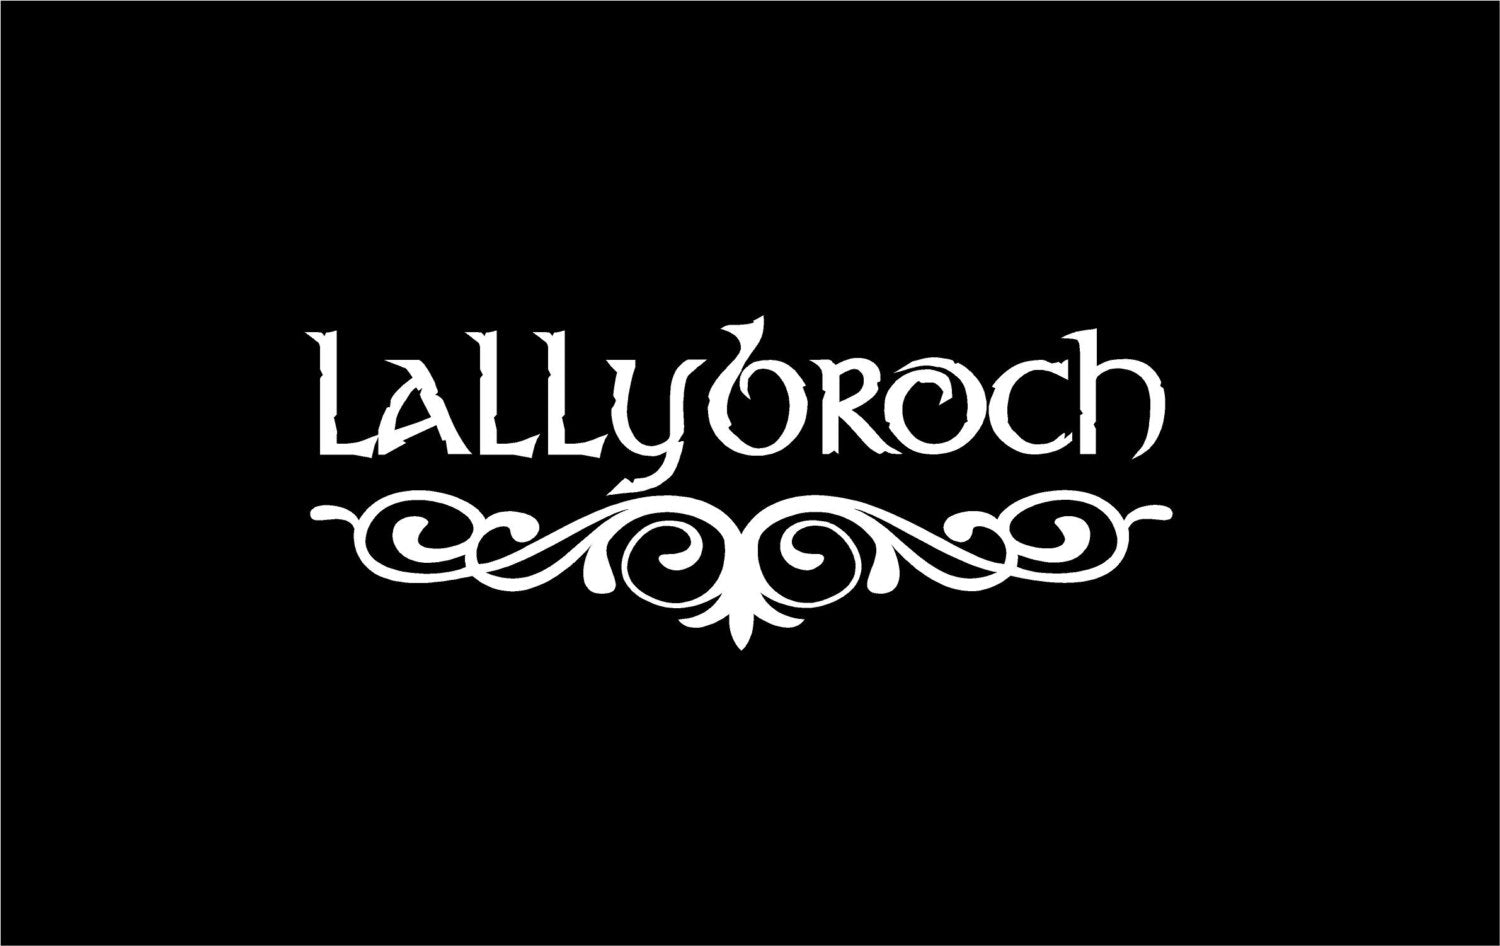 Scottish decal Lallybroch decal Outlander decal Gaelic decal Celtic decal Custom Vinyl Decal Sticker Car Vehicle Auto Window decal